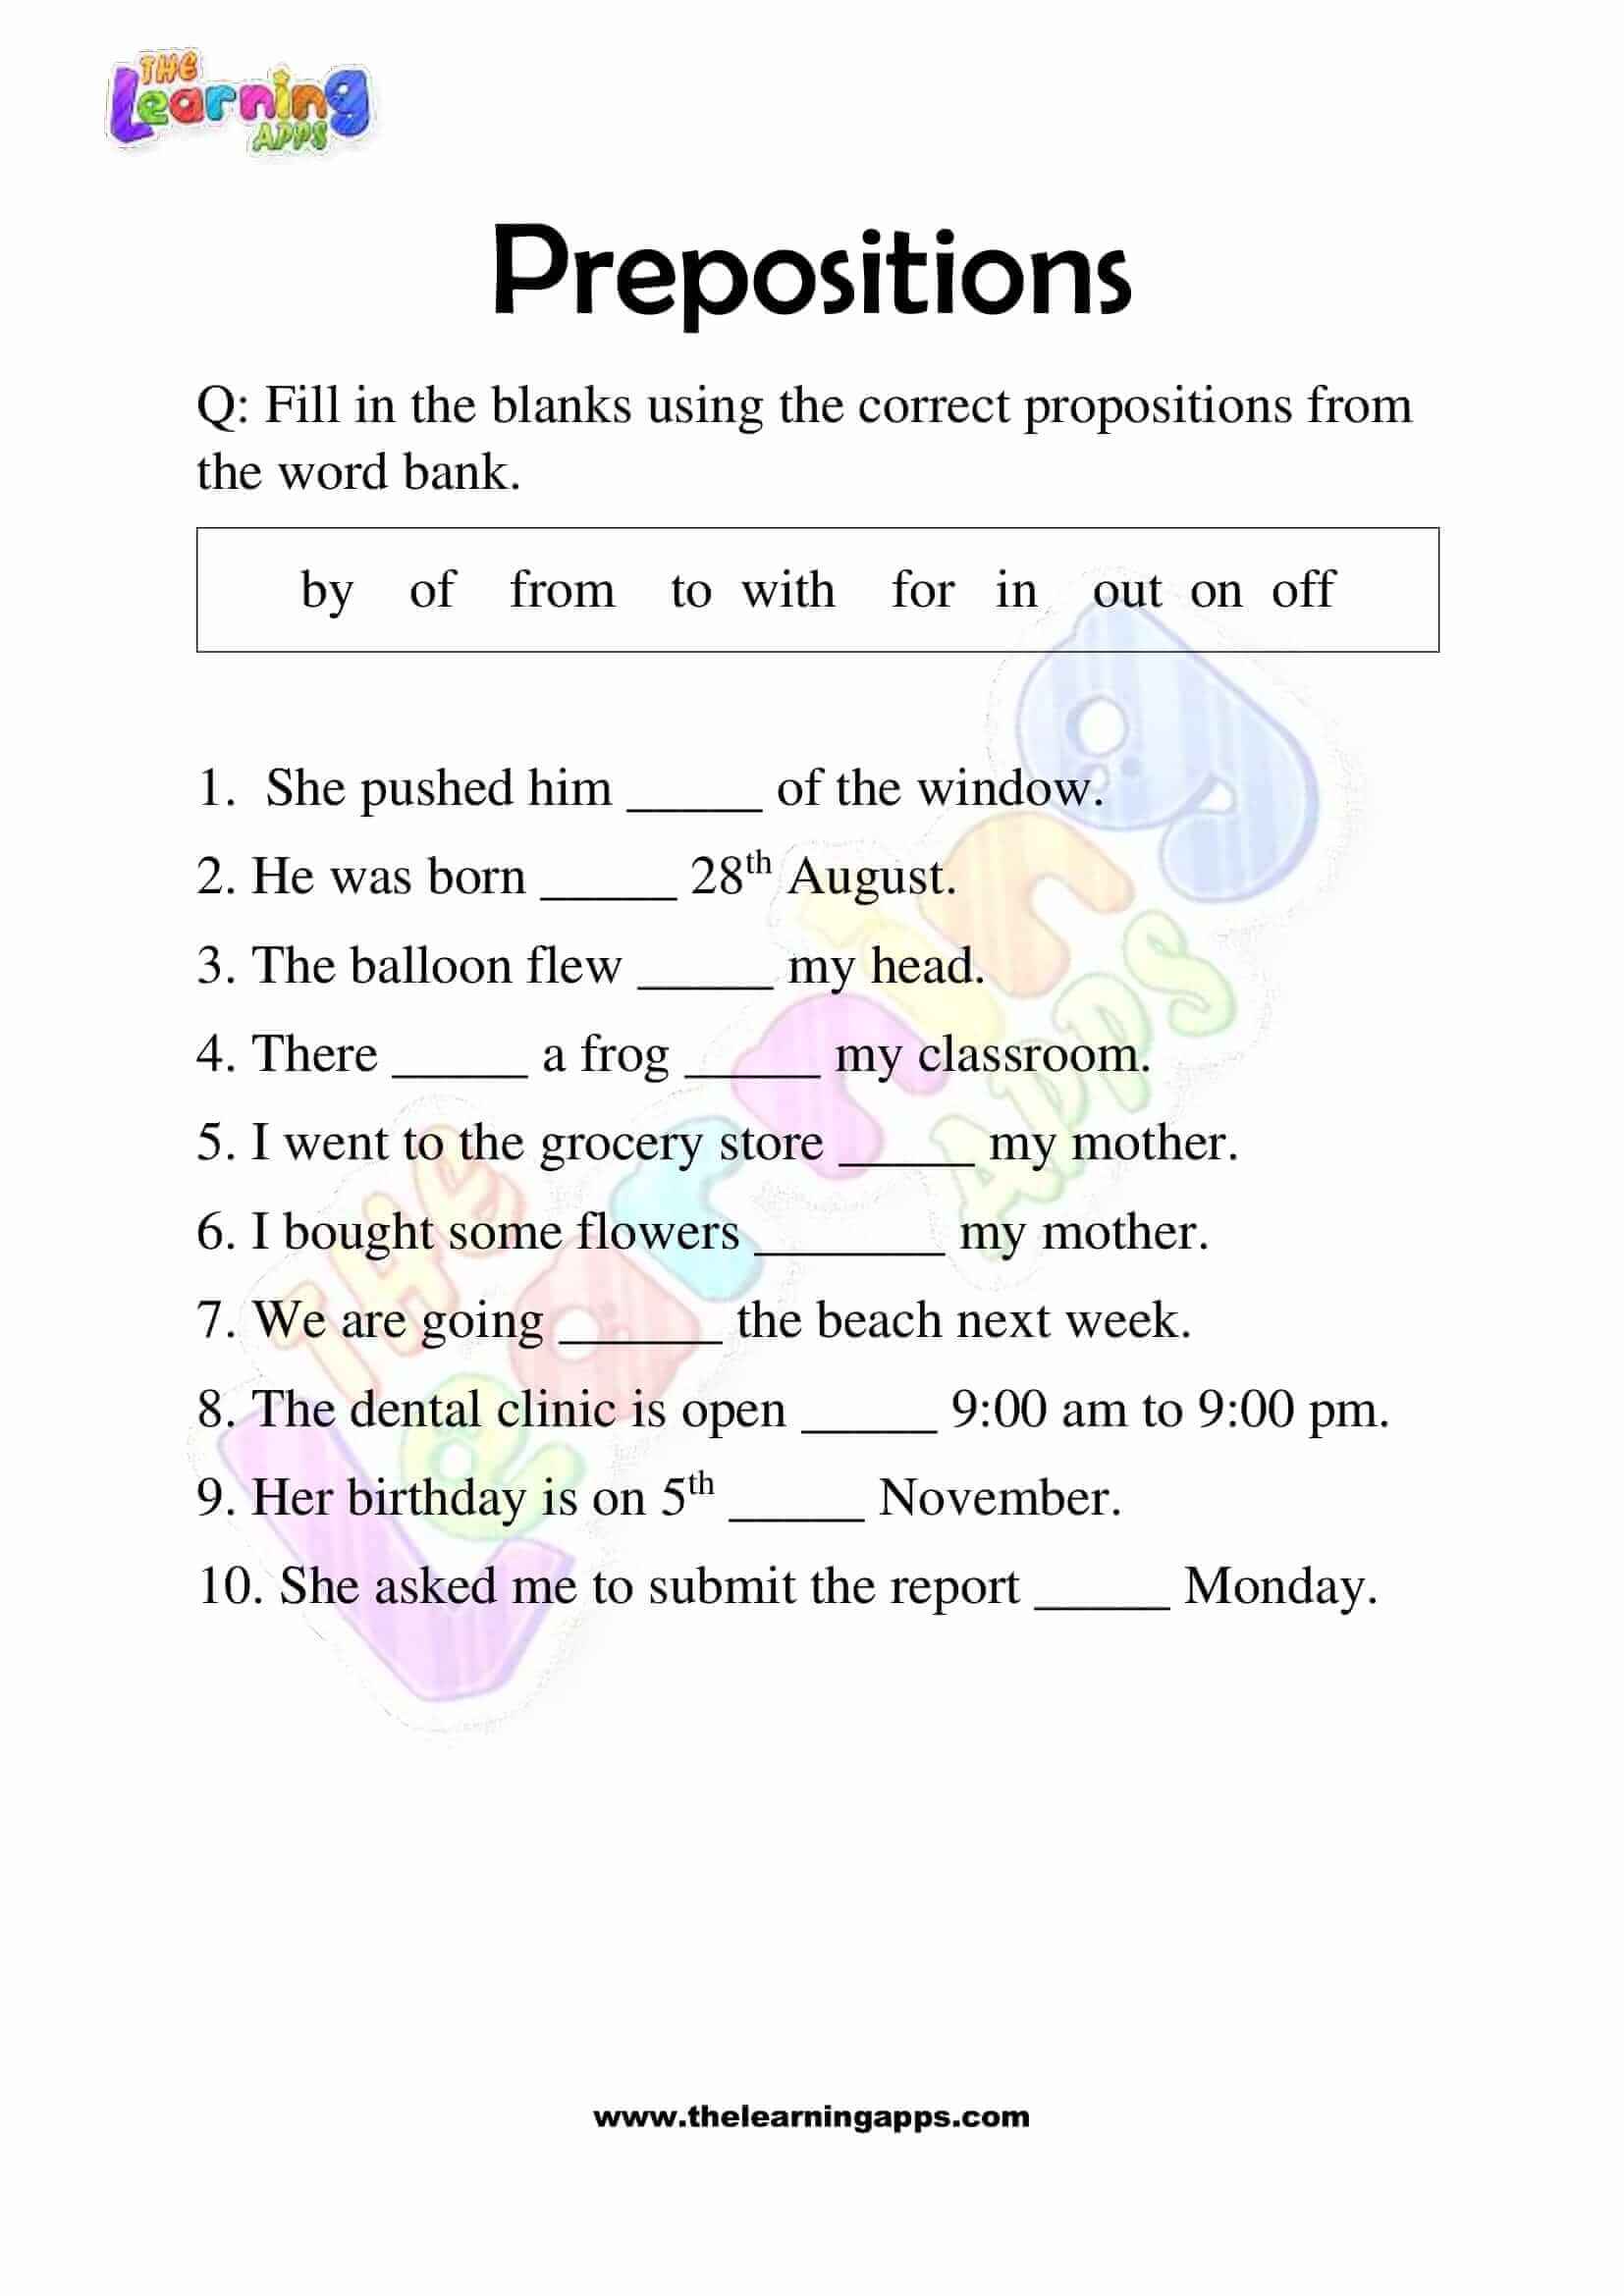 Prepositions-Worksheets-Grade-3-Activity-4